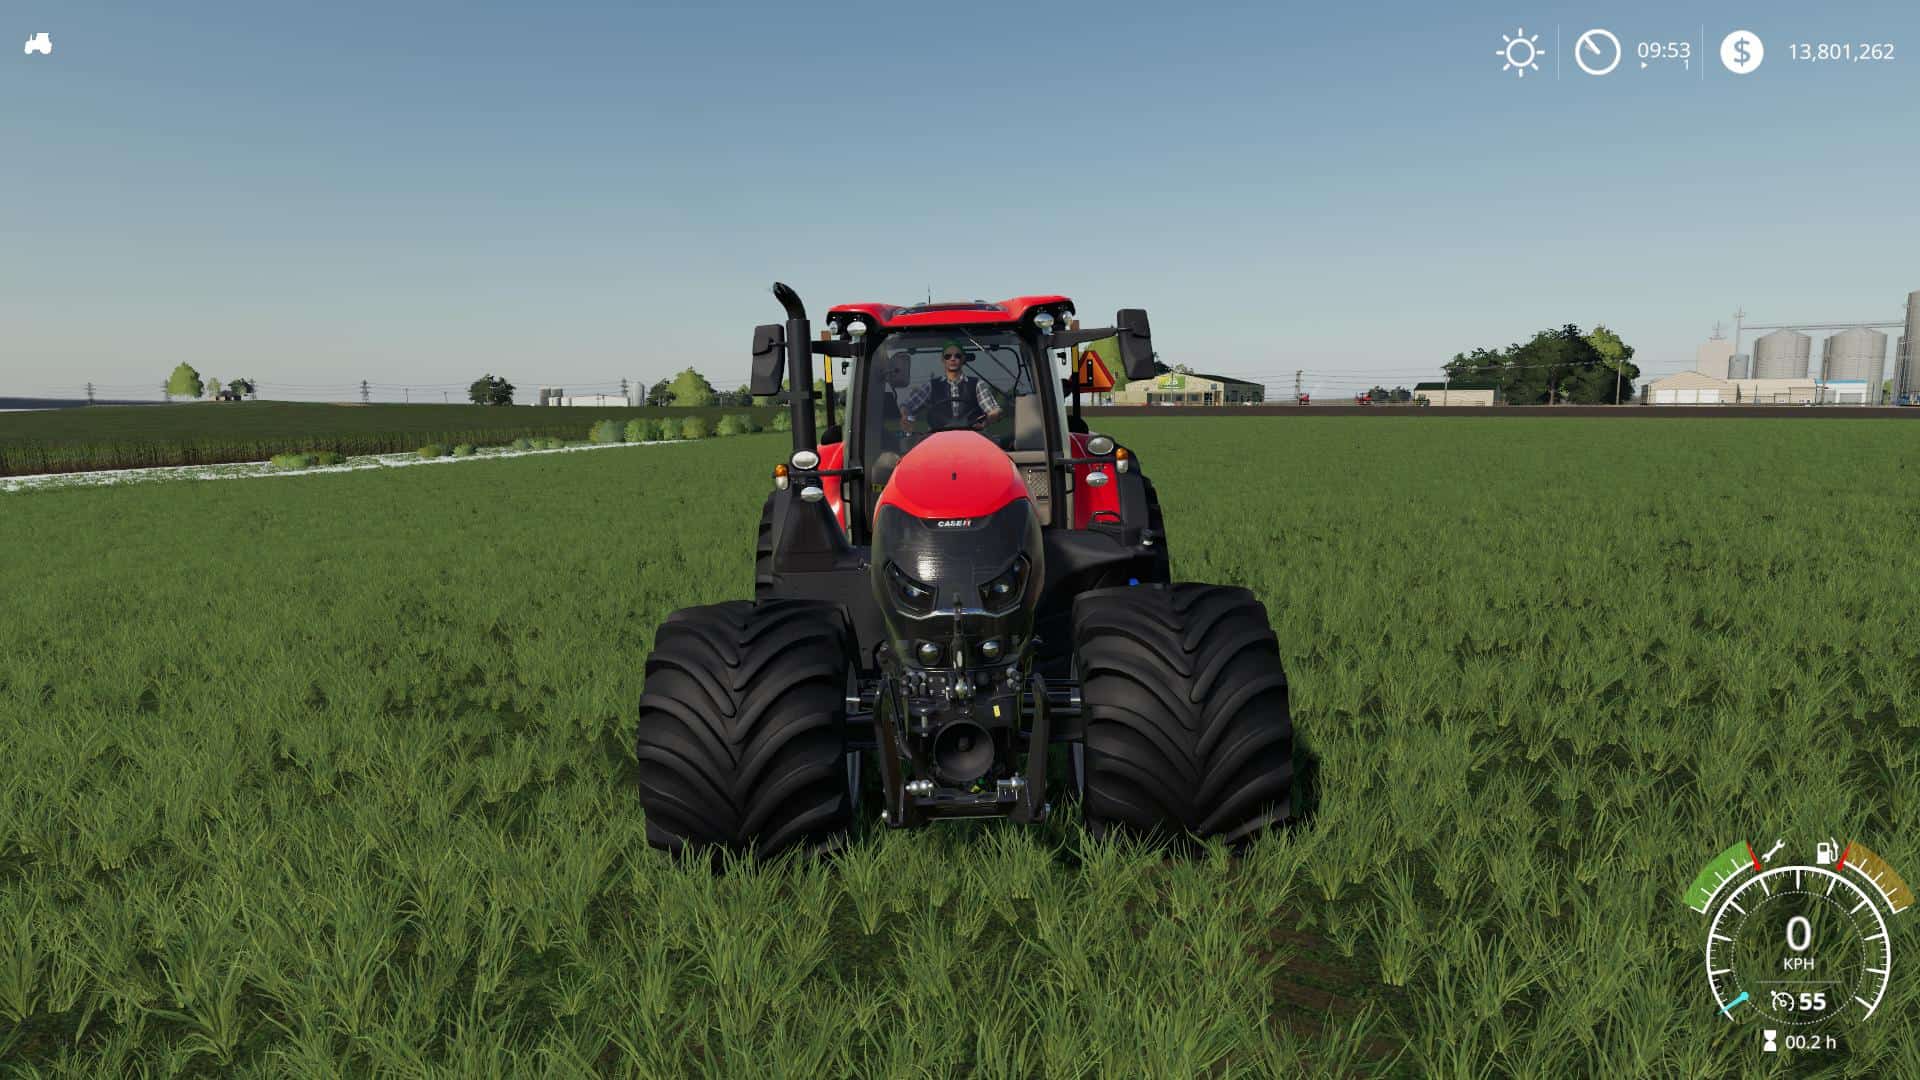 farming simulator 19 mod